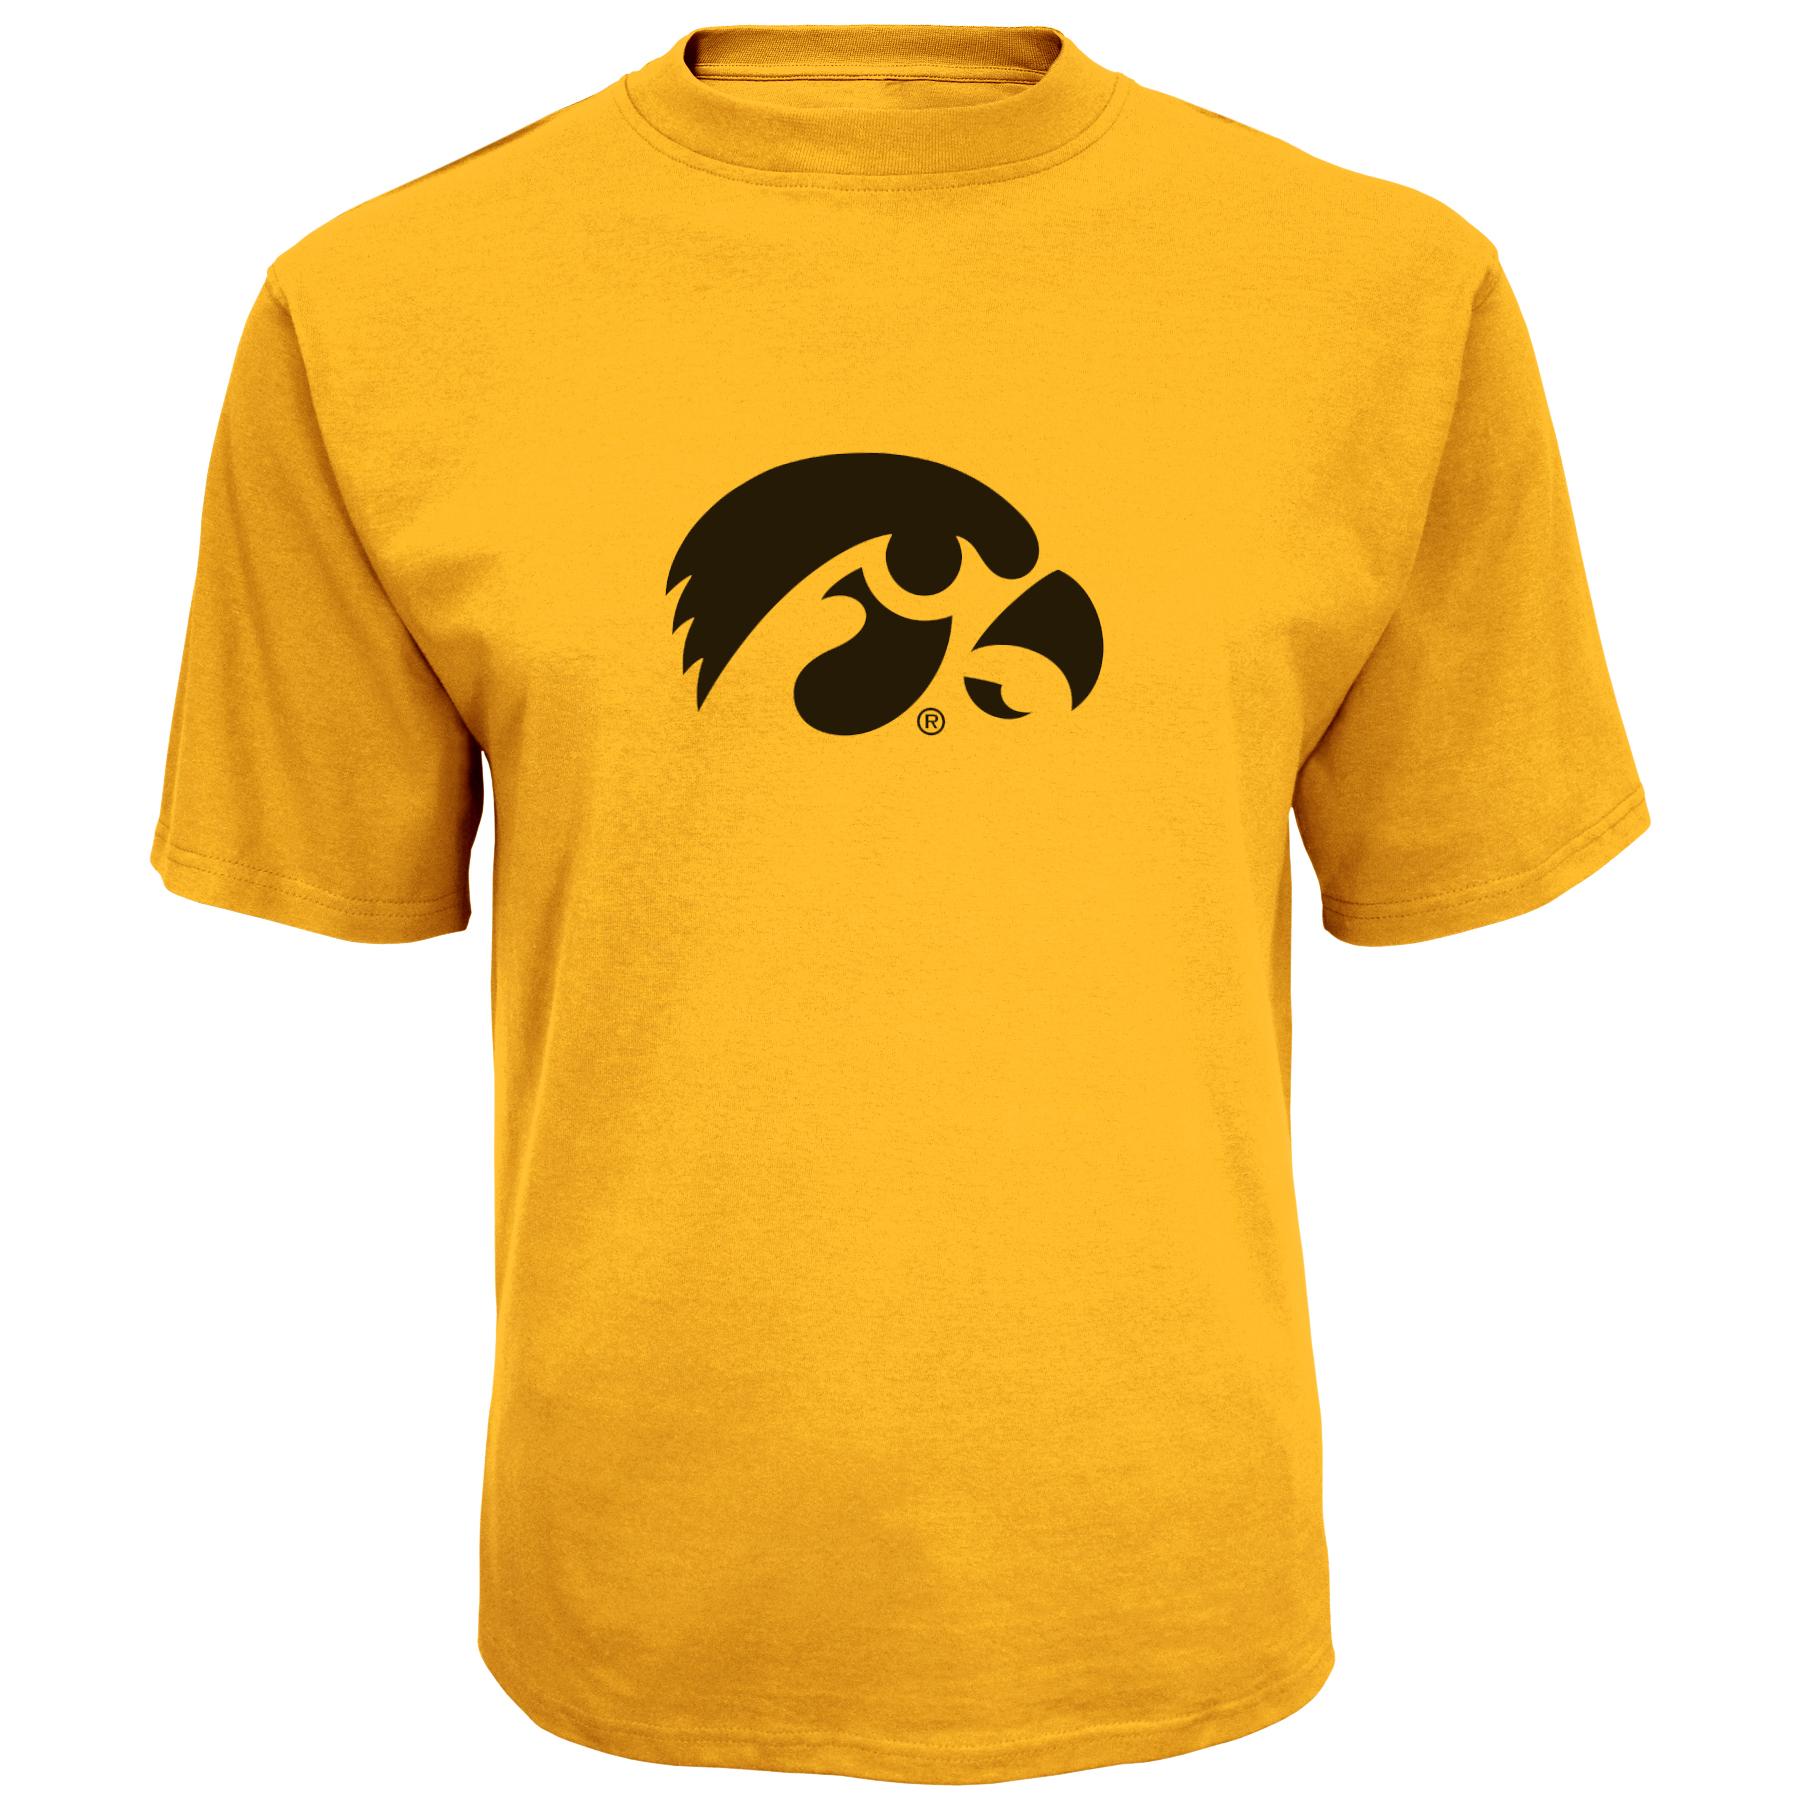 NCAA Men's Graphic T-Shirt - Iowa Hawkeyes